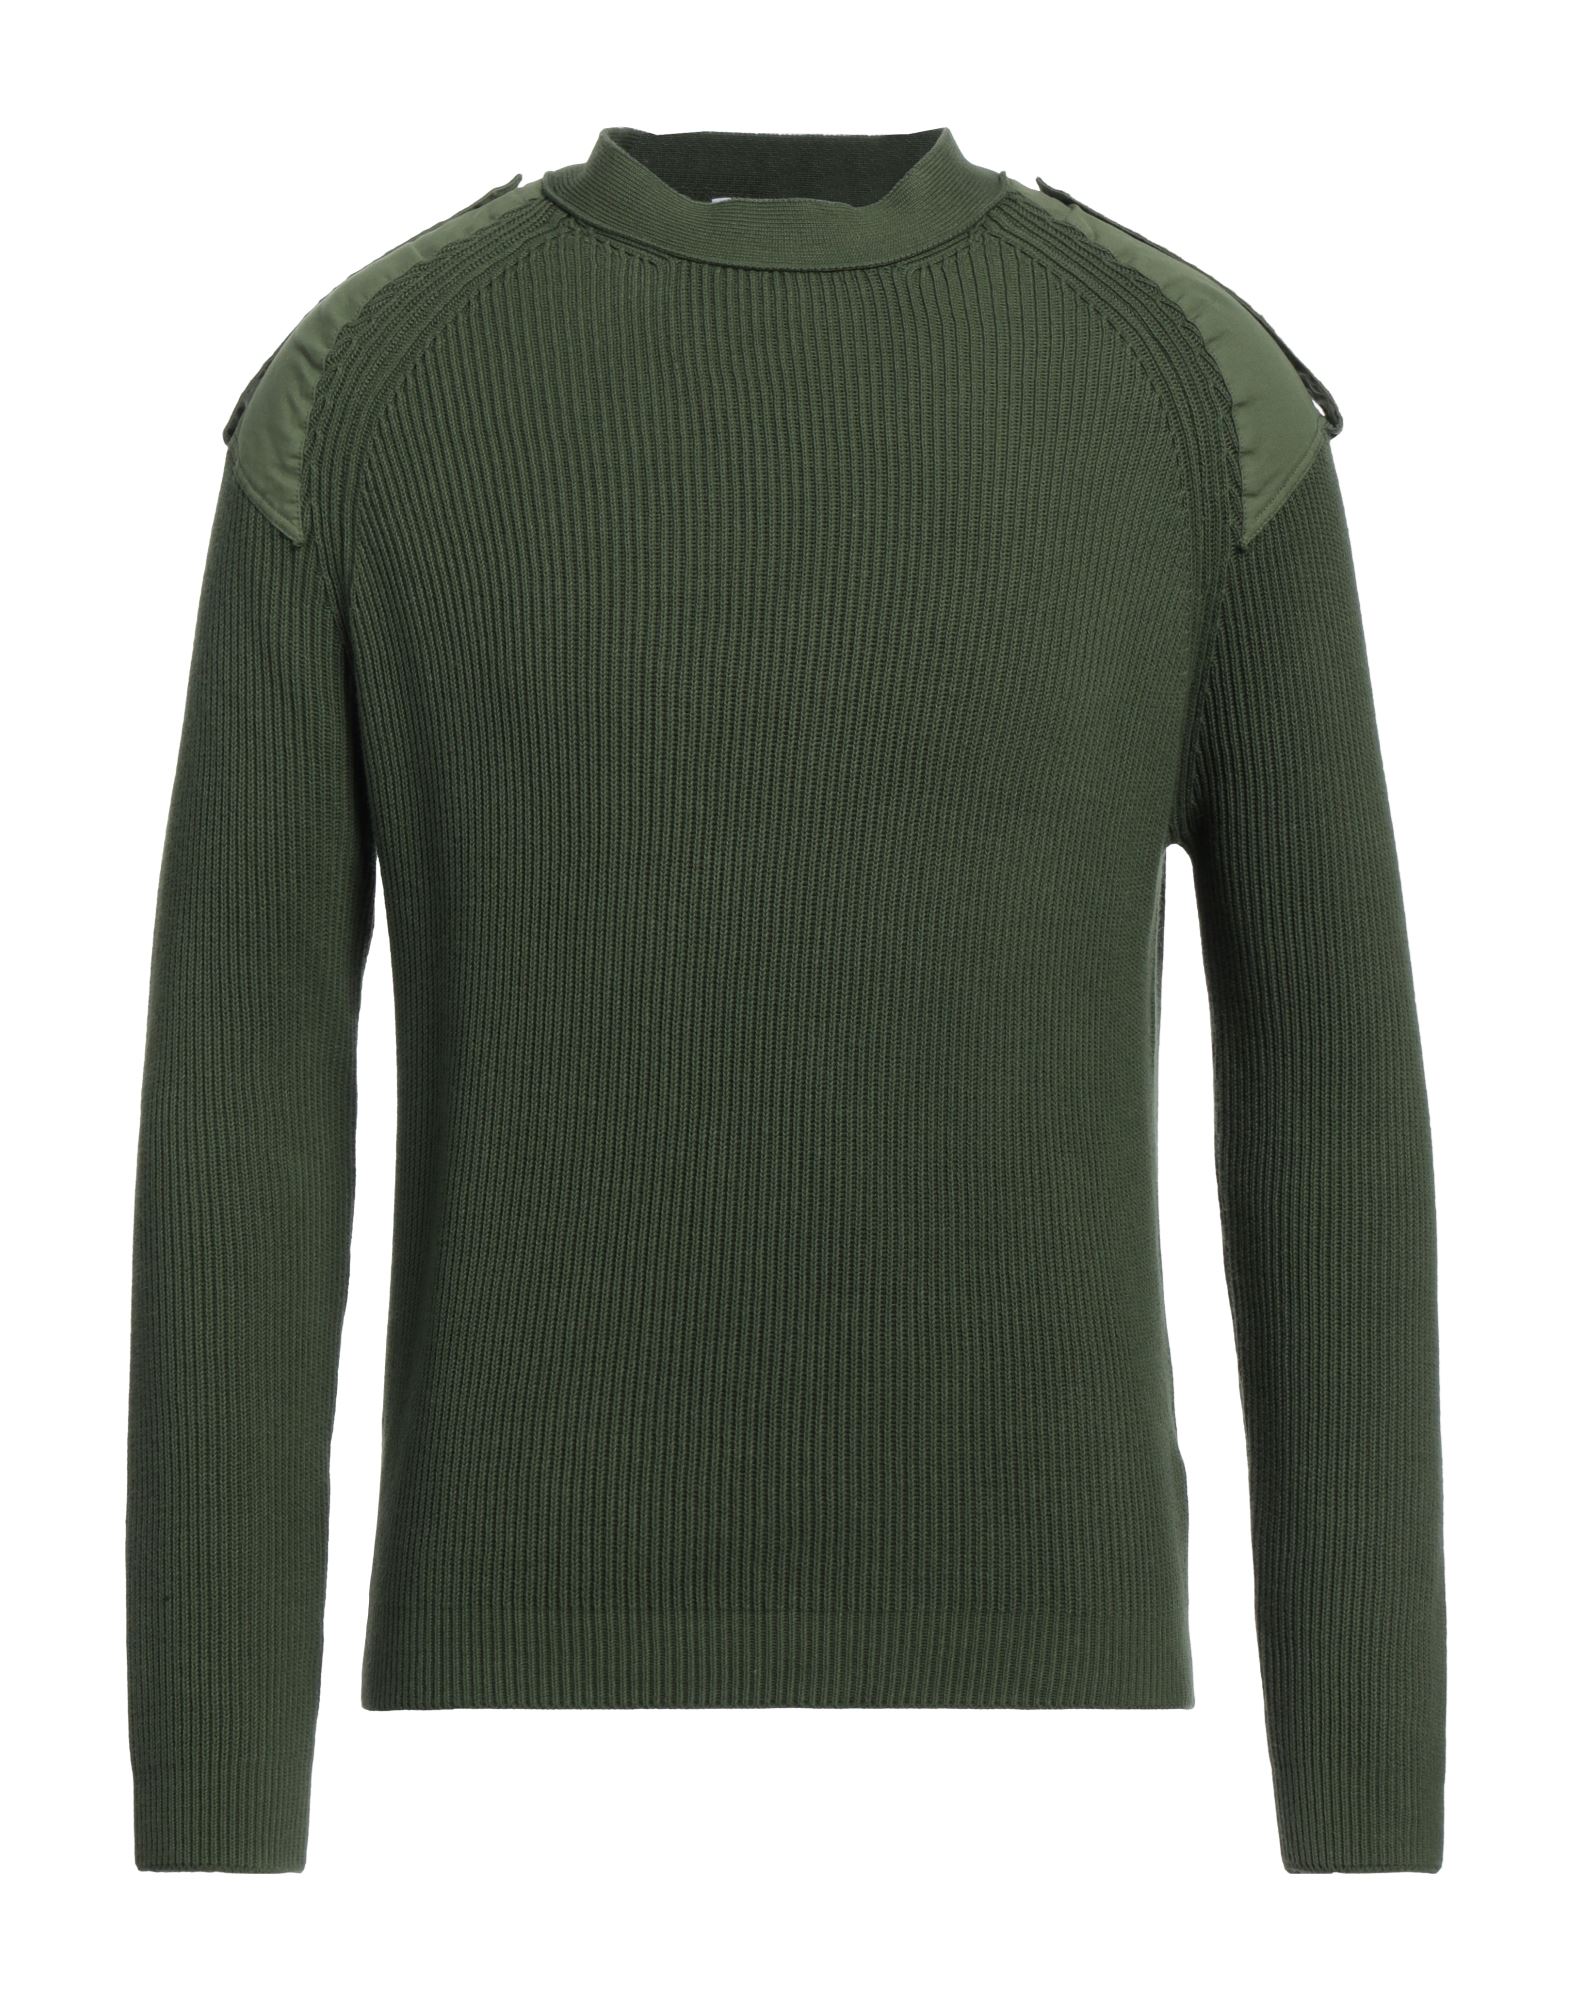 Alpha Studio Sweaters In Green